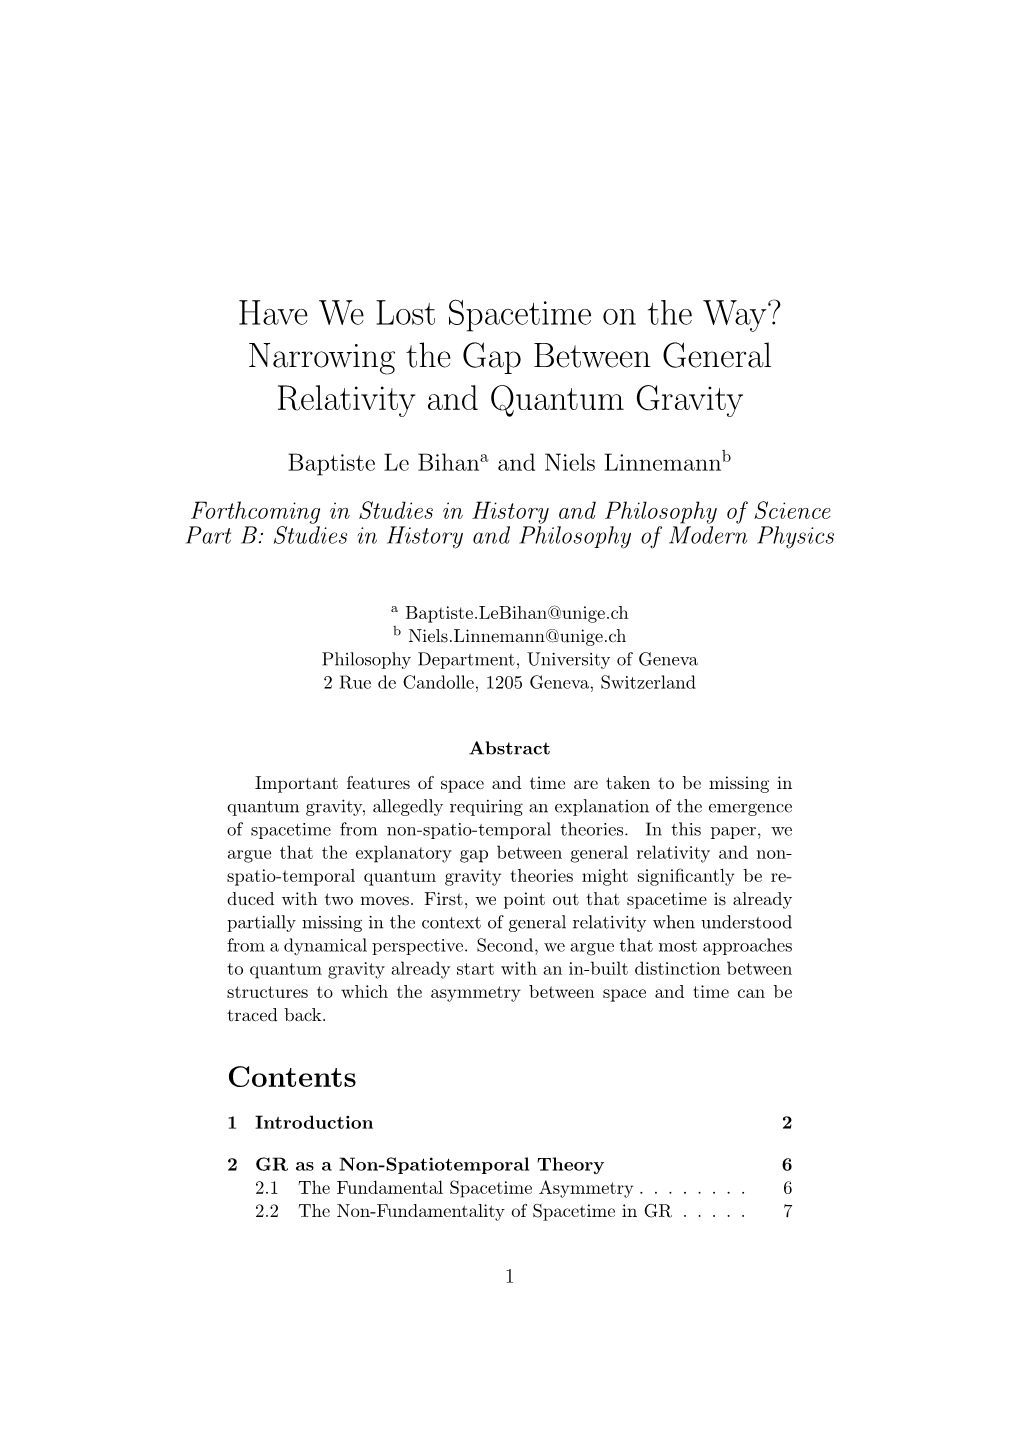 Narrowing the Gap Between General Relativity and Quantum Gravity